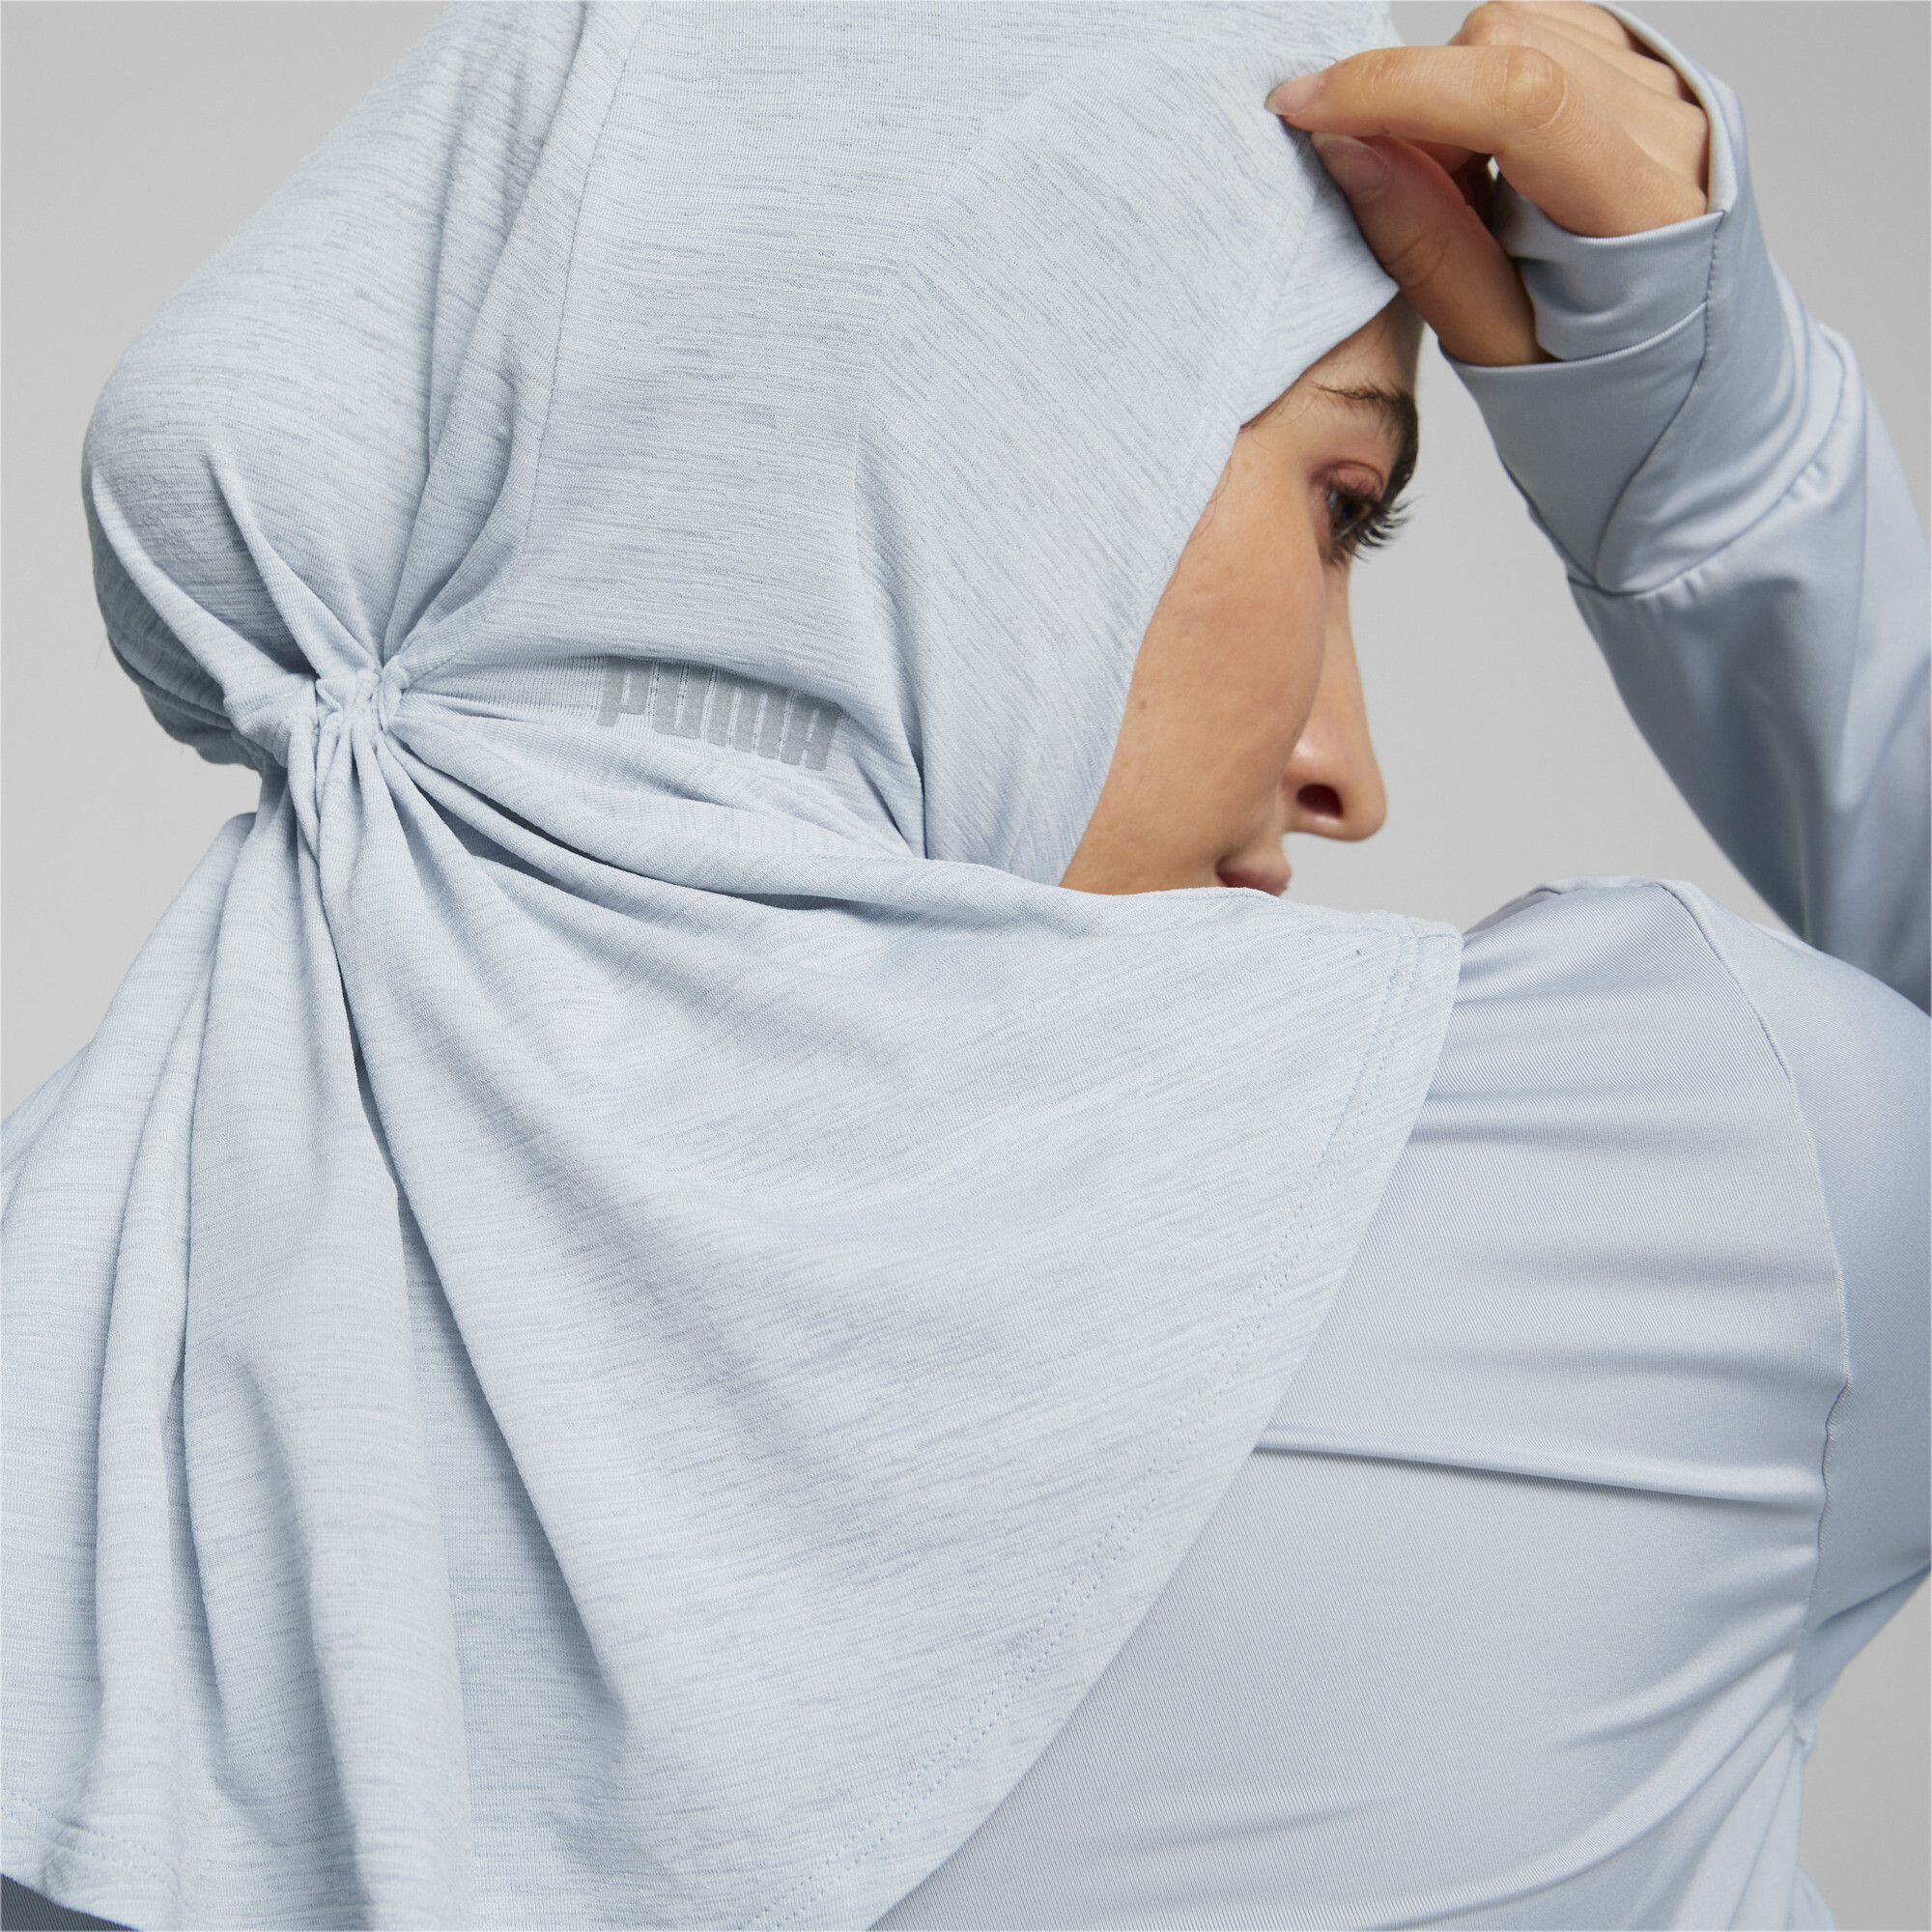 Women's PUMA Sports Running Hijab In Gray, Size Small